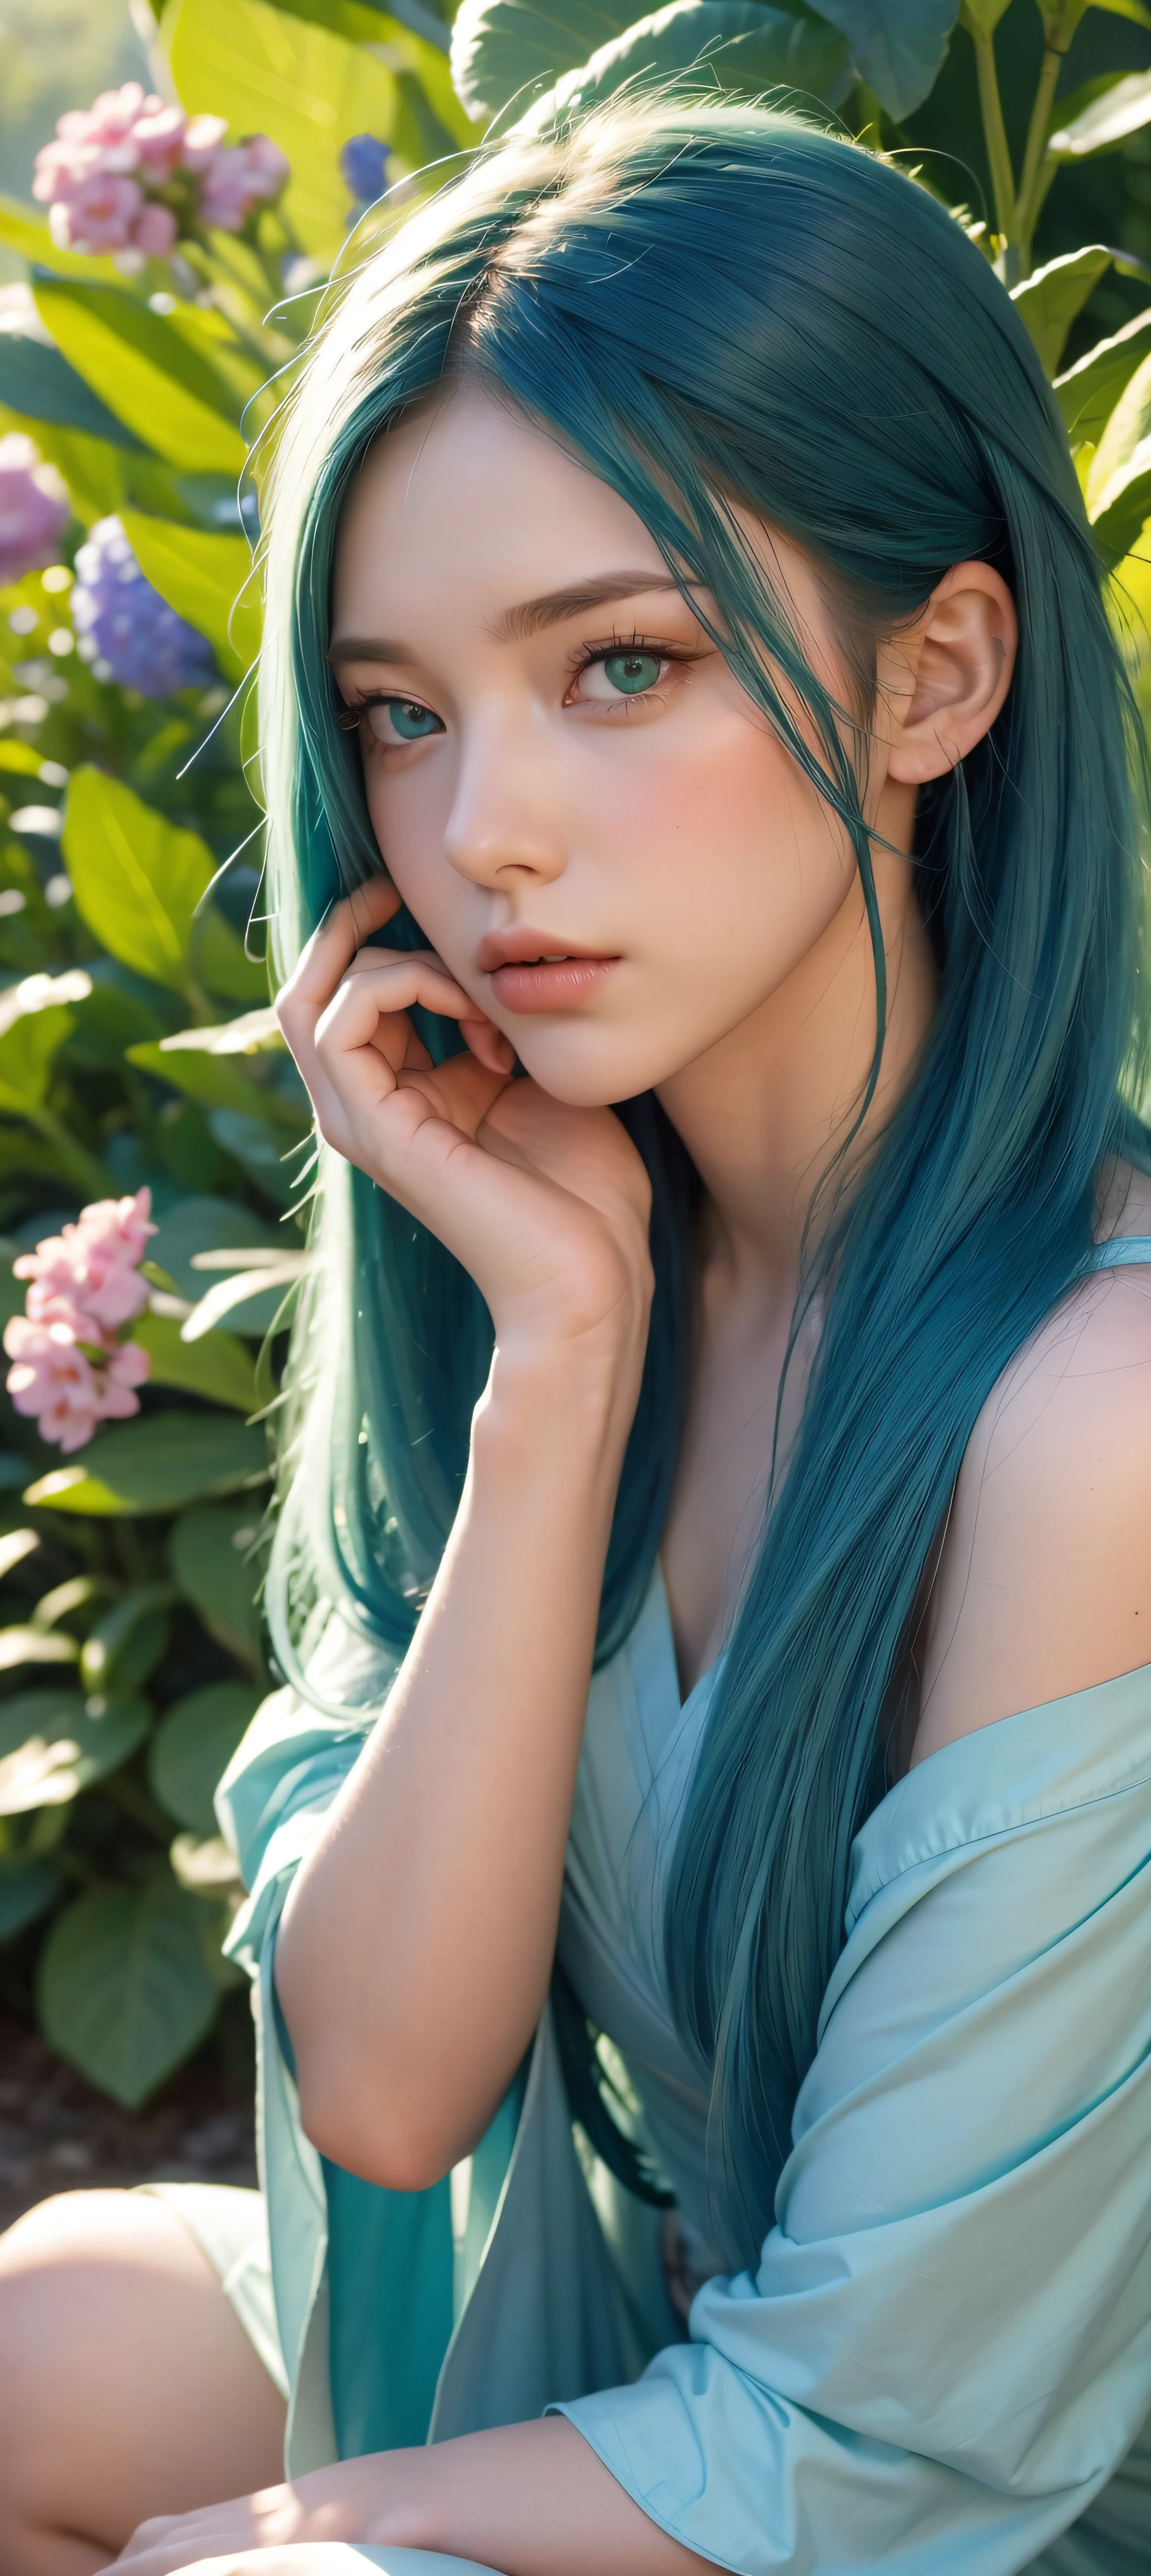 8K, 날것의, (걸작, 최고의 품질),1녹색 식물과 꽃밭에 앉아 있는 긴 청록색 파란 머리를 가진 소녀, 상세한 녹색 눈, 그녀의 손은 그녀의 턱 아래에 있다, 따뜻한 조명, 아름다운 빨간 드레스, 아름다운 전경